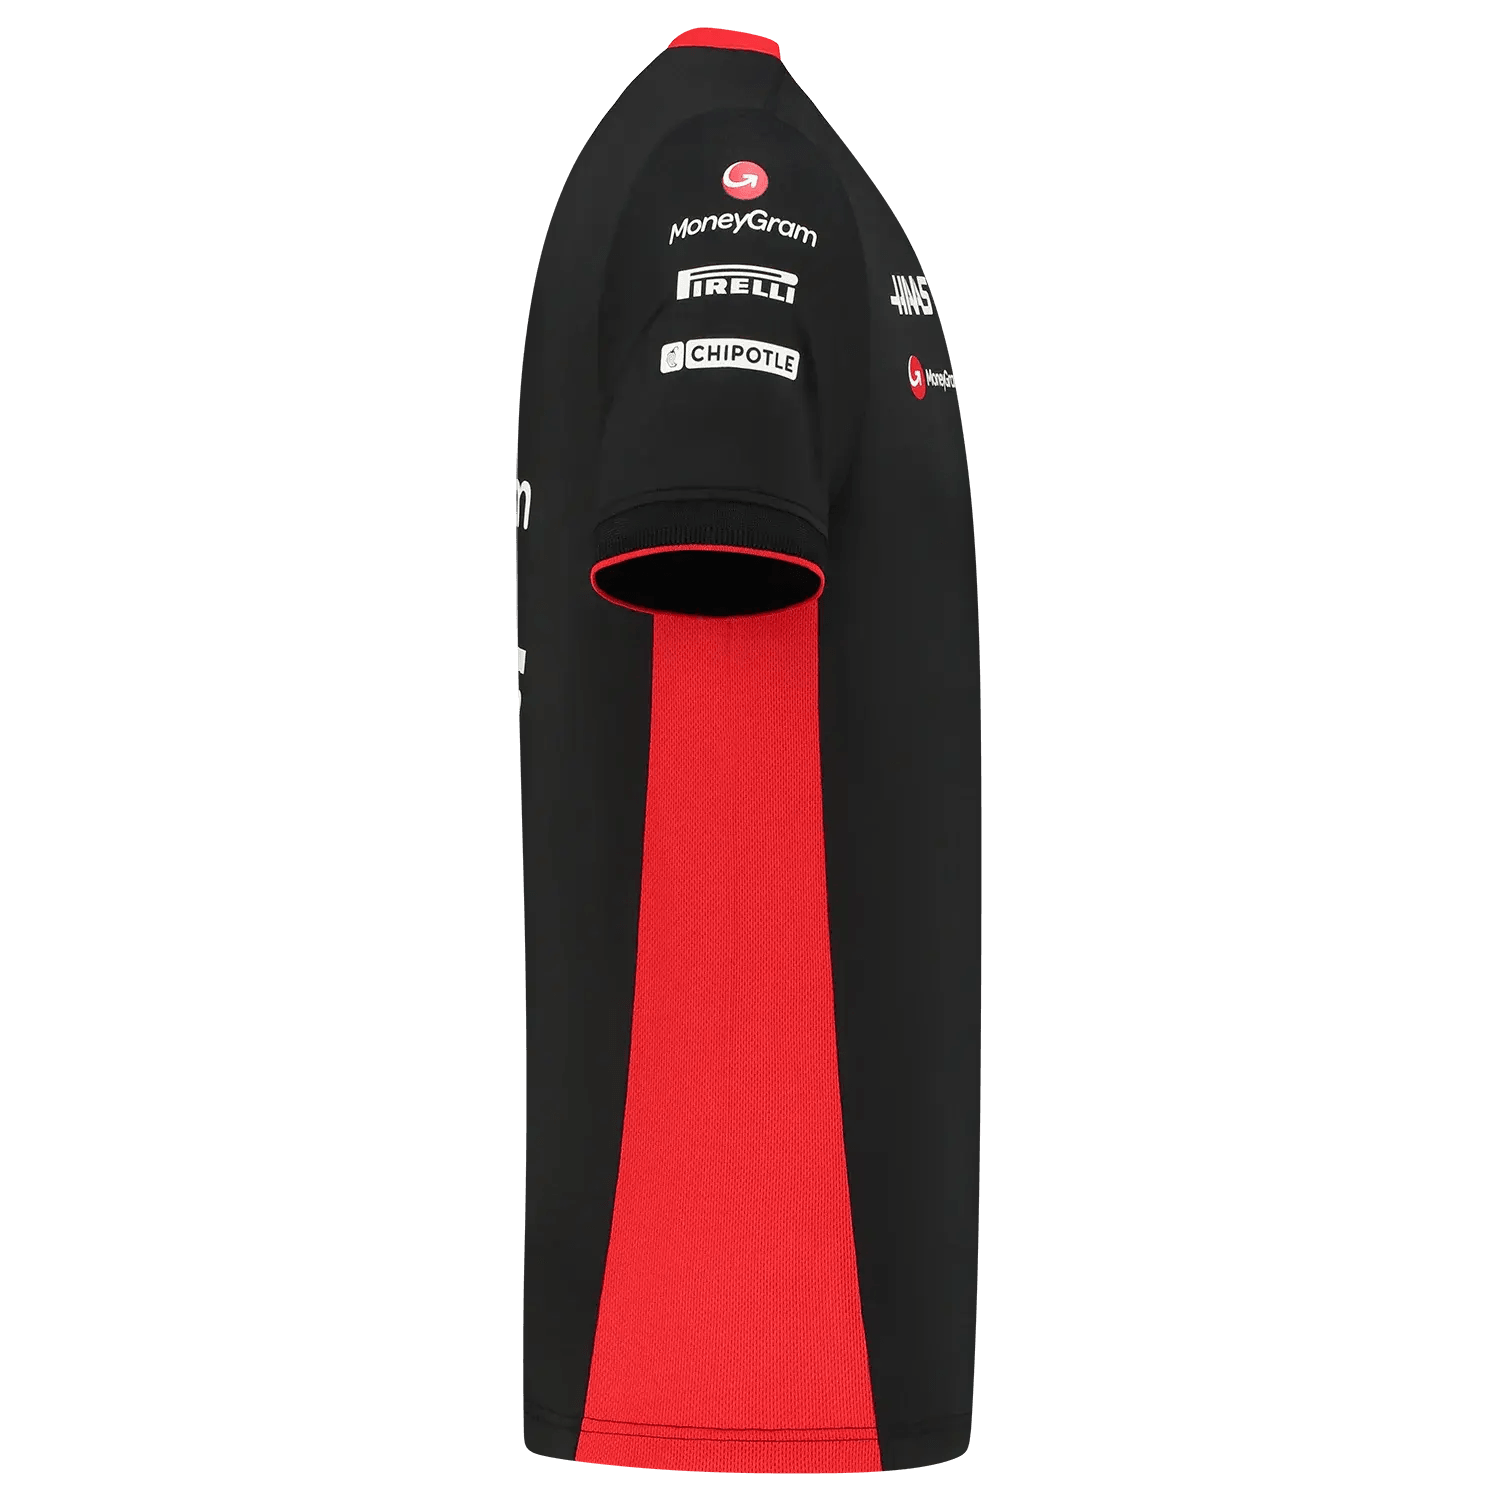 Fitted T-shirt Haas F1 Team DASH RACEGEAR